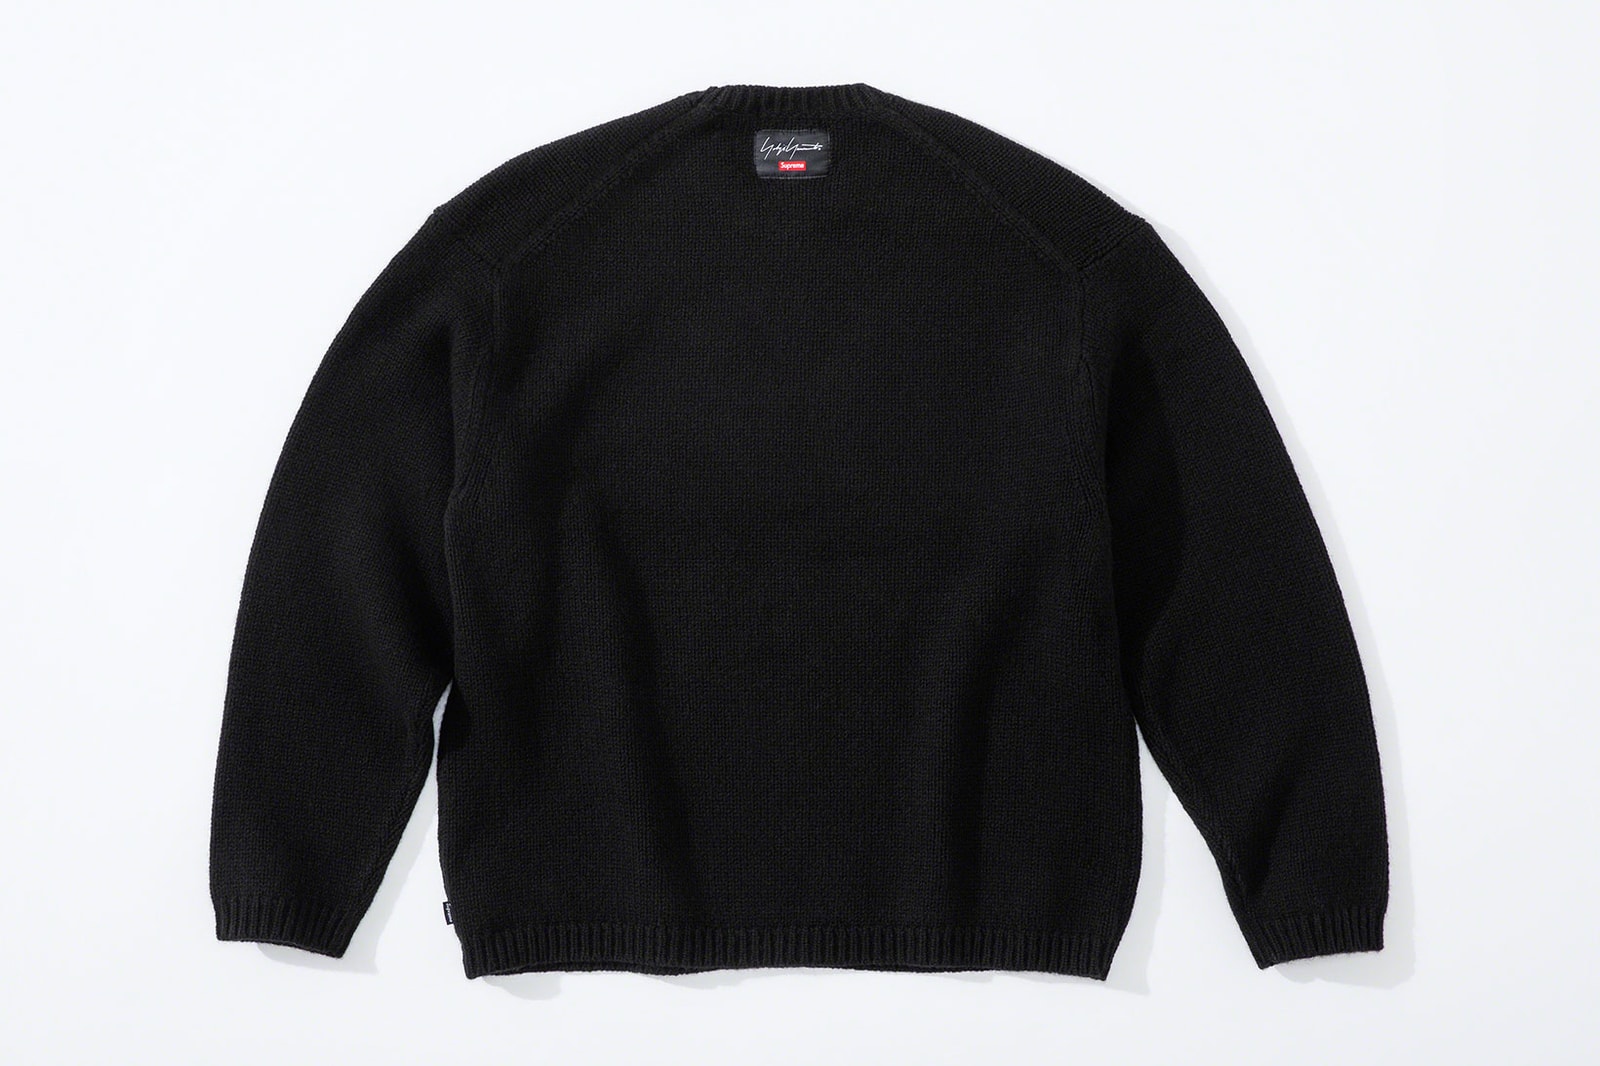 supreme yohji yamamoto collaboration lookbook puffers suits jackets knit sweaters hoodies release info